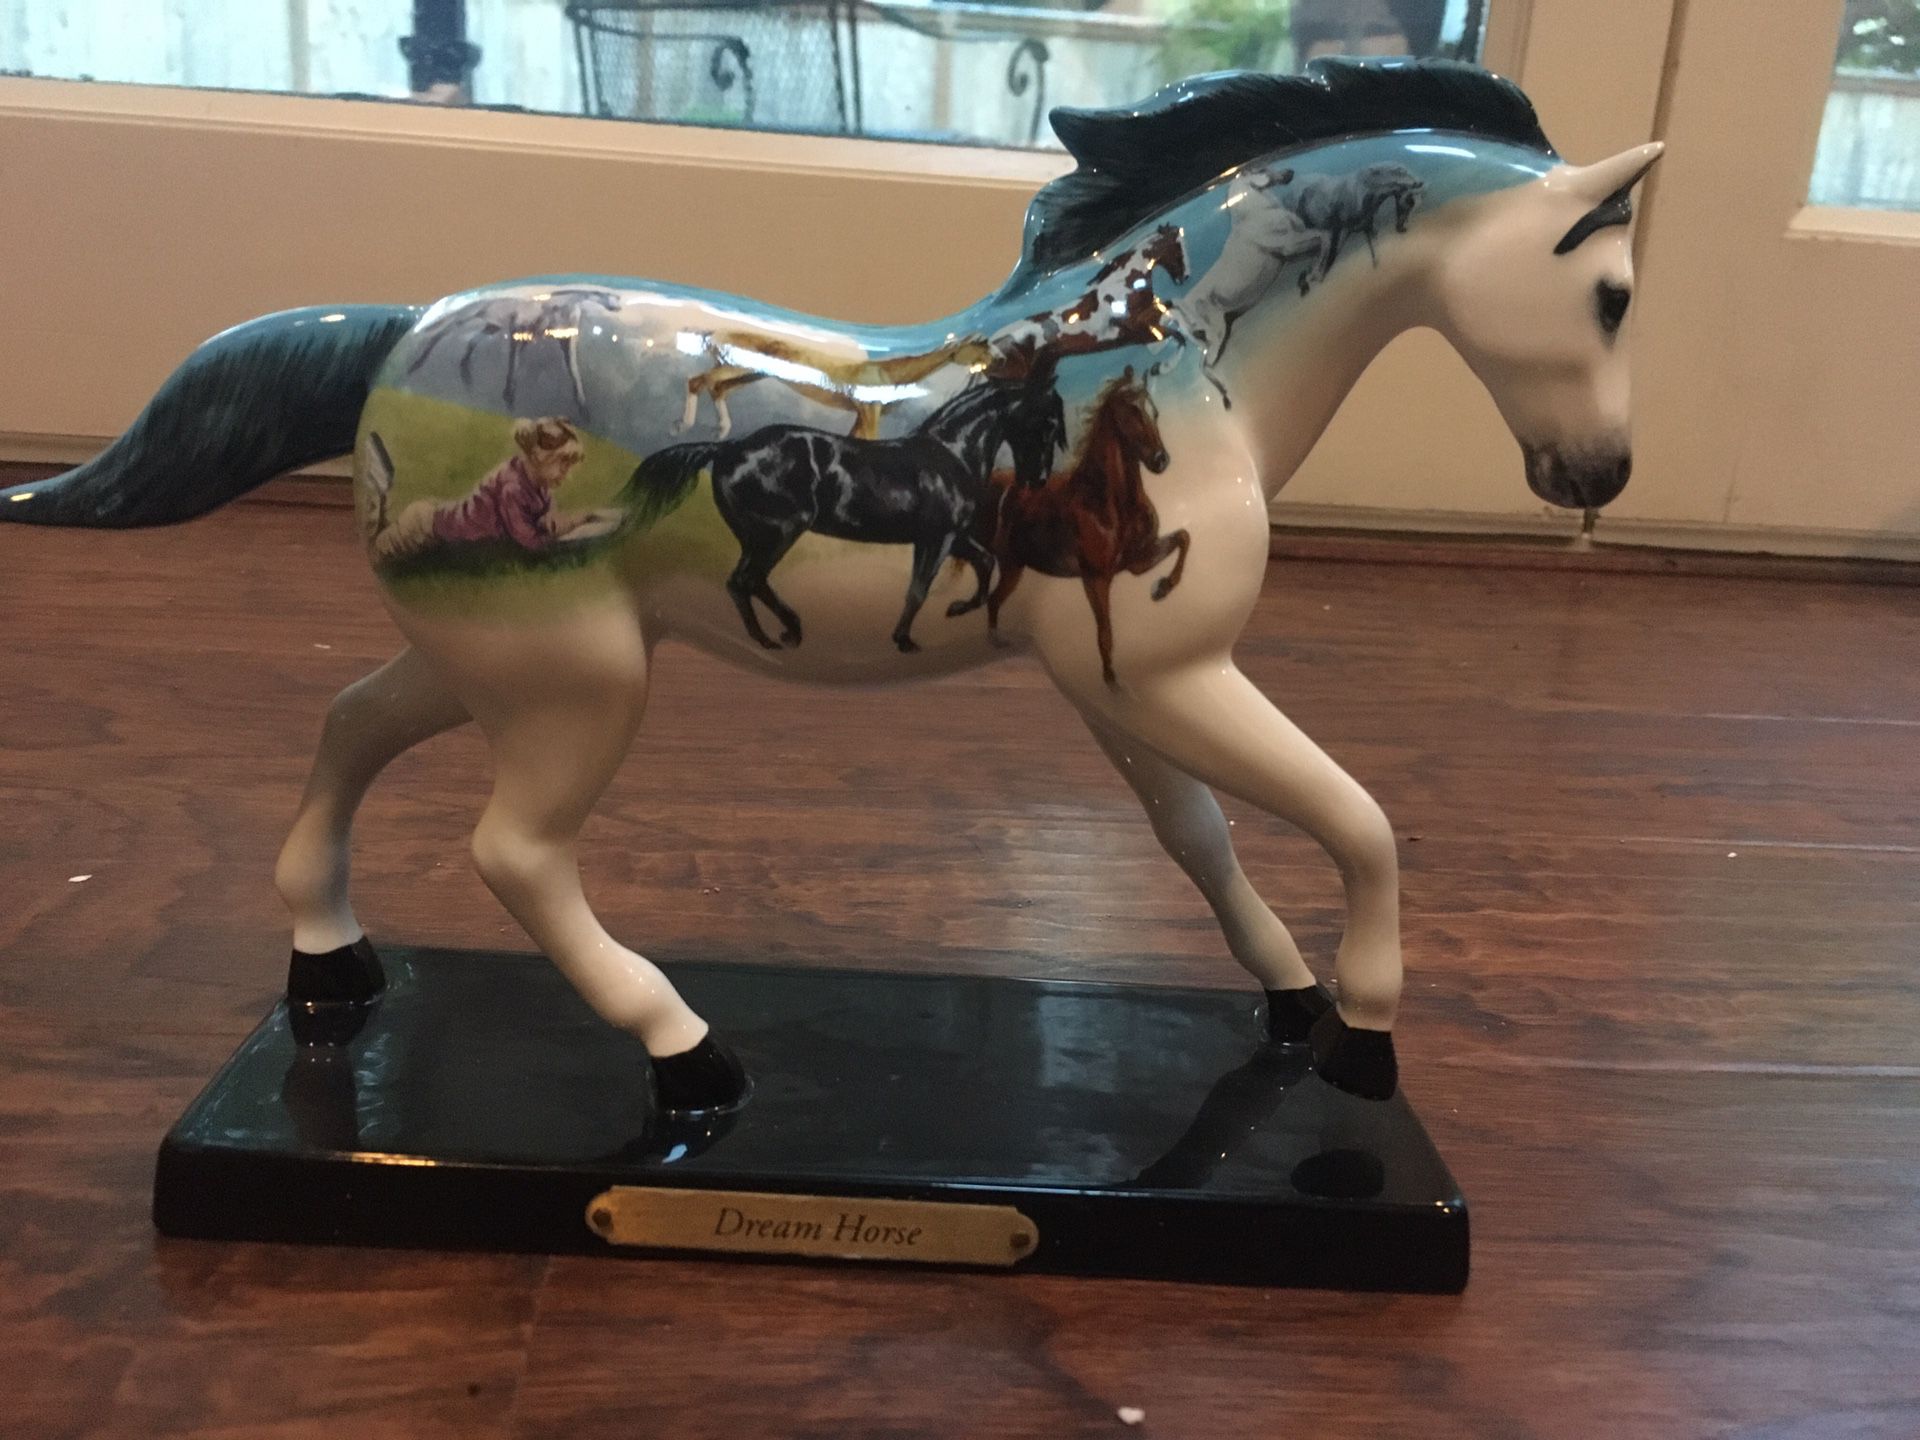 Dream Horse painted pony.